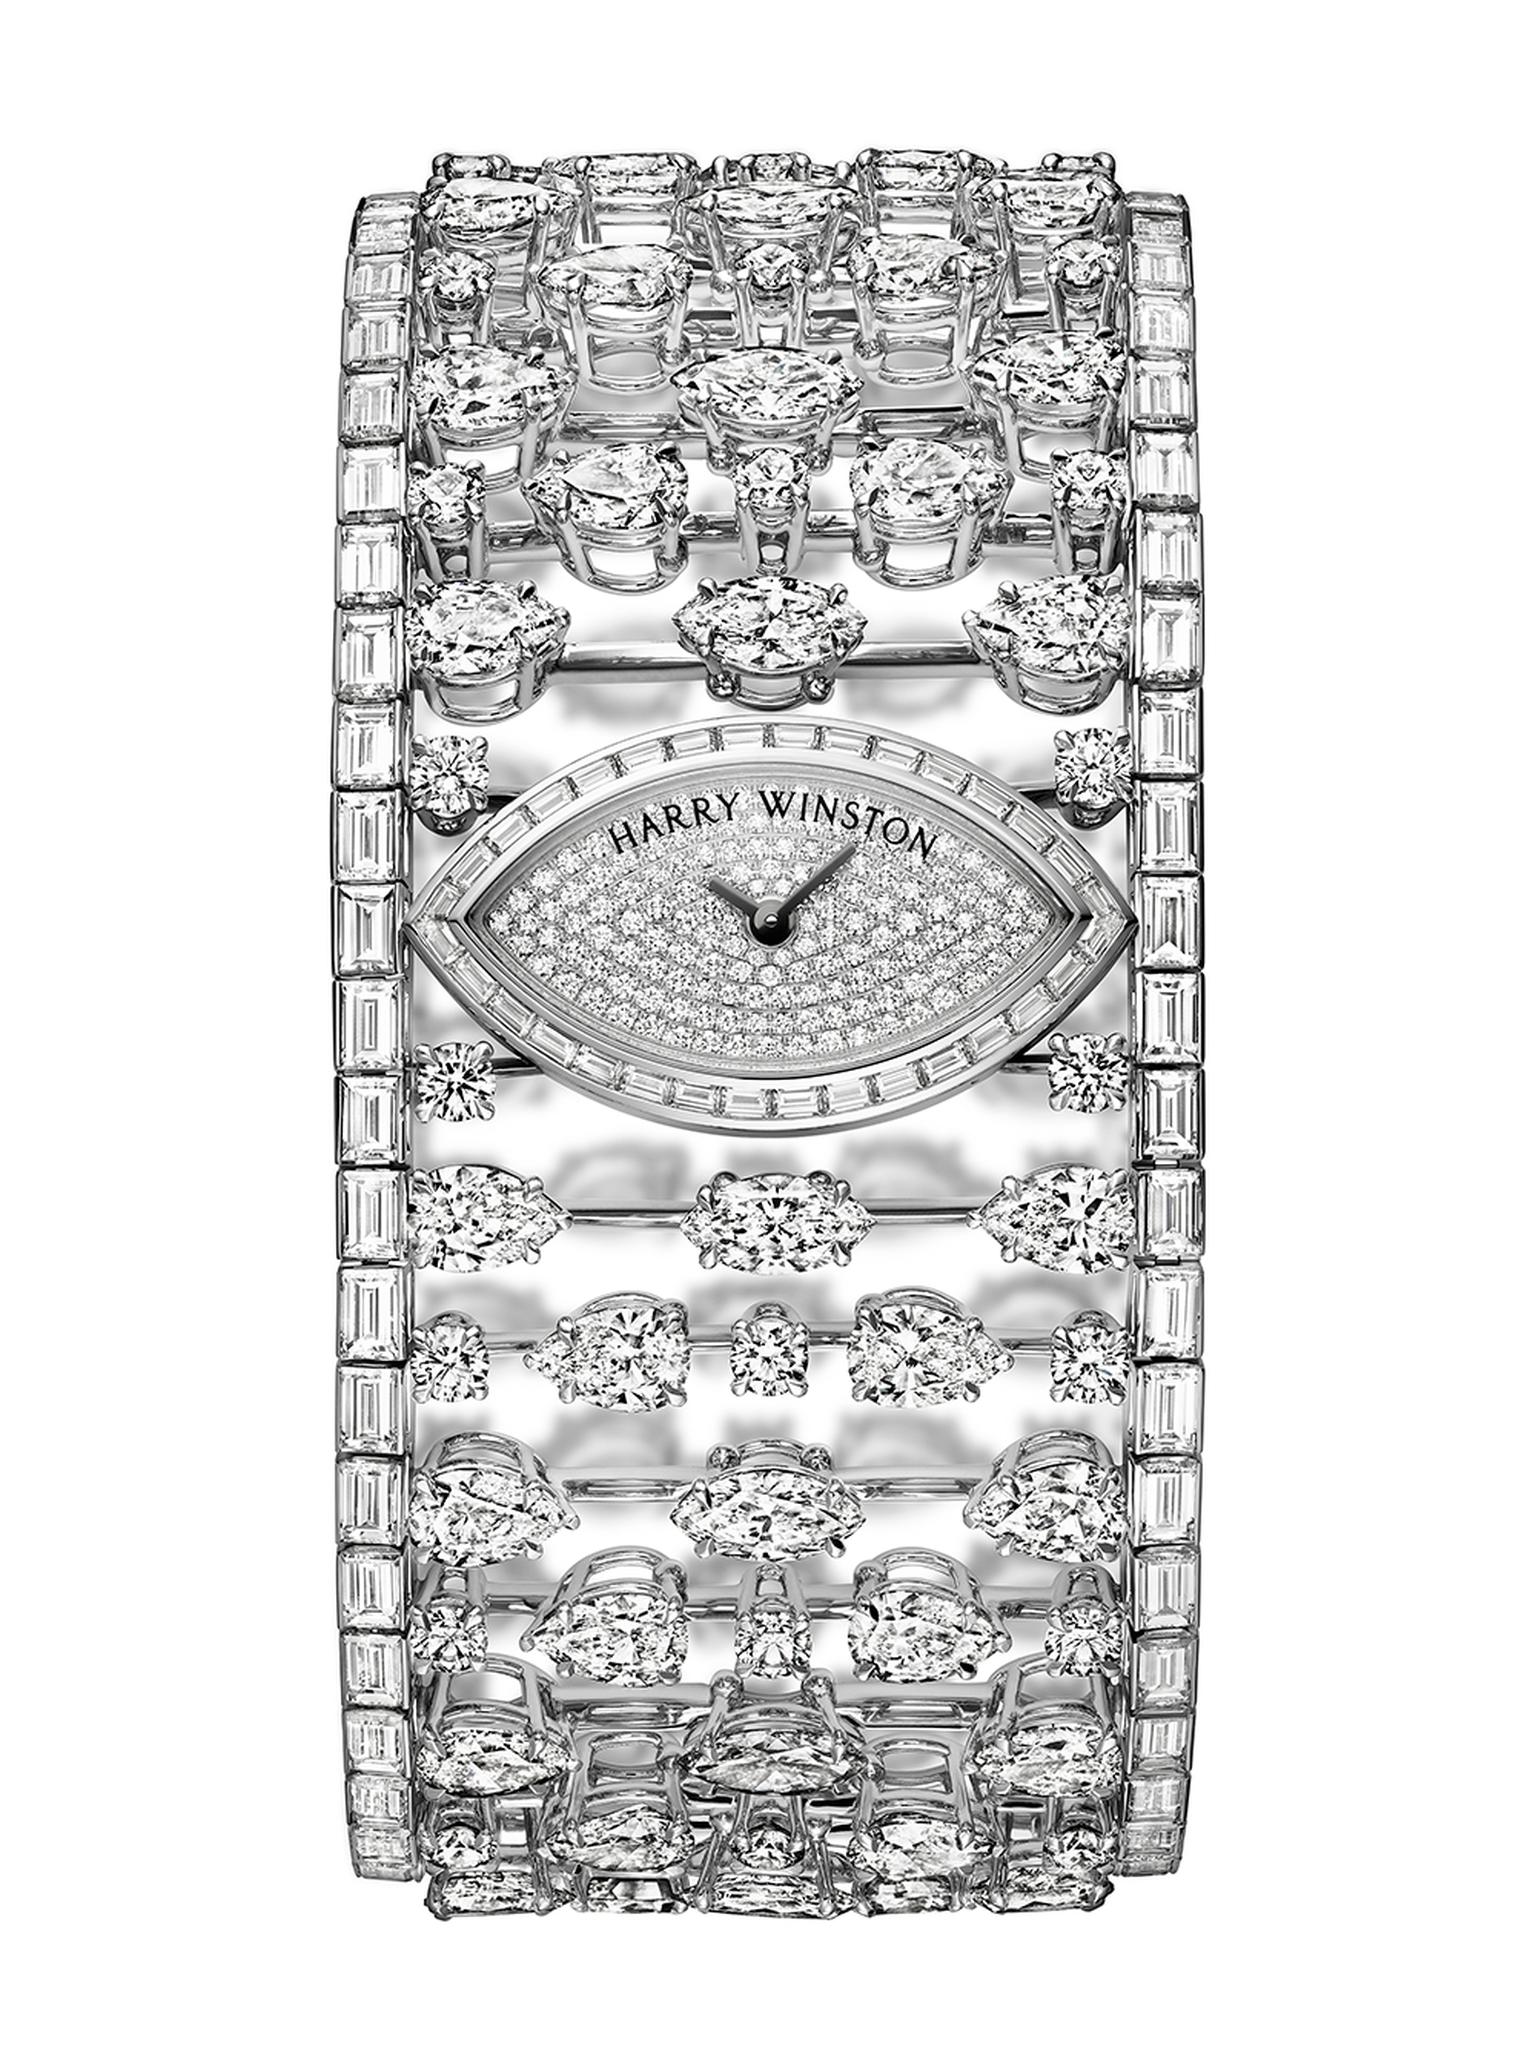 The one-of-a-kind Harry Winston Mrs Winston High Jewelery Timepiece is set with 230 diamonds (£POA).